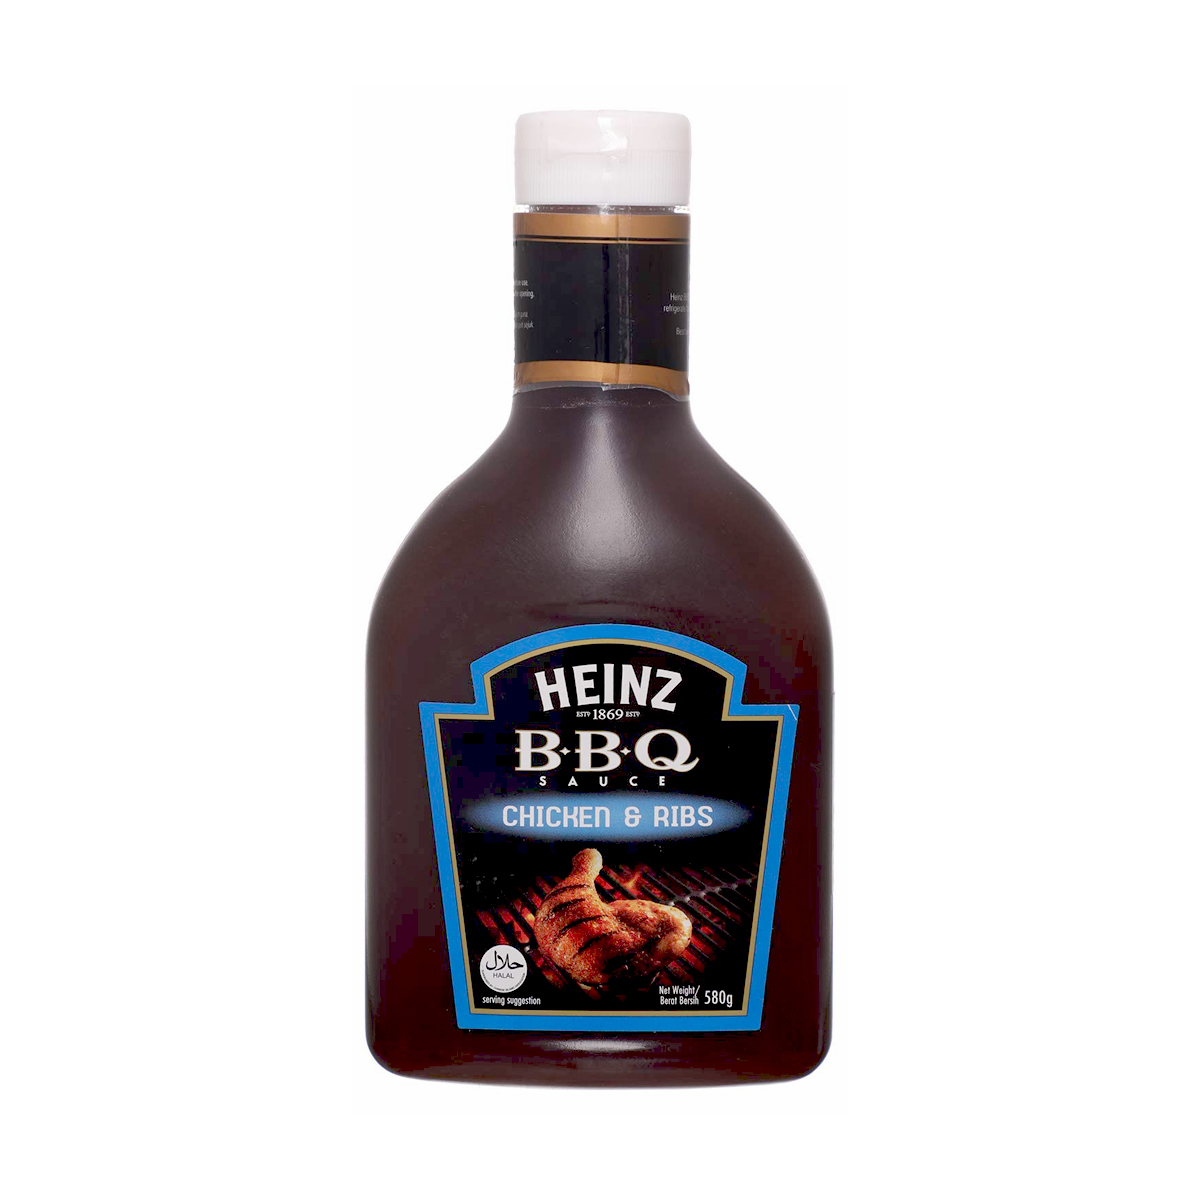 Heinz Chicken & Ribs BBQ Sauce 580g